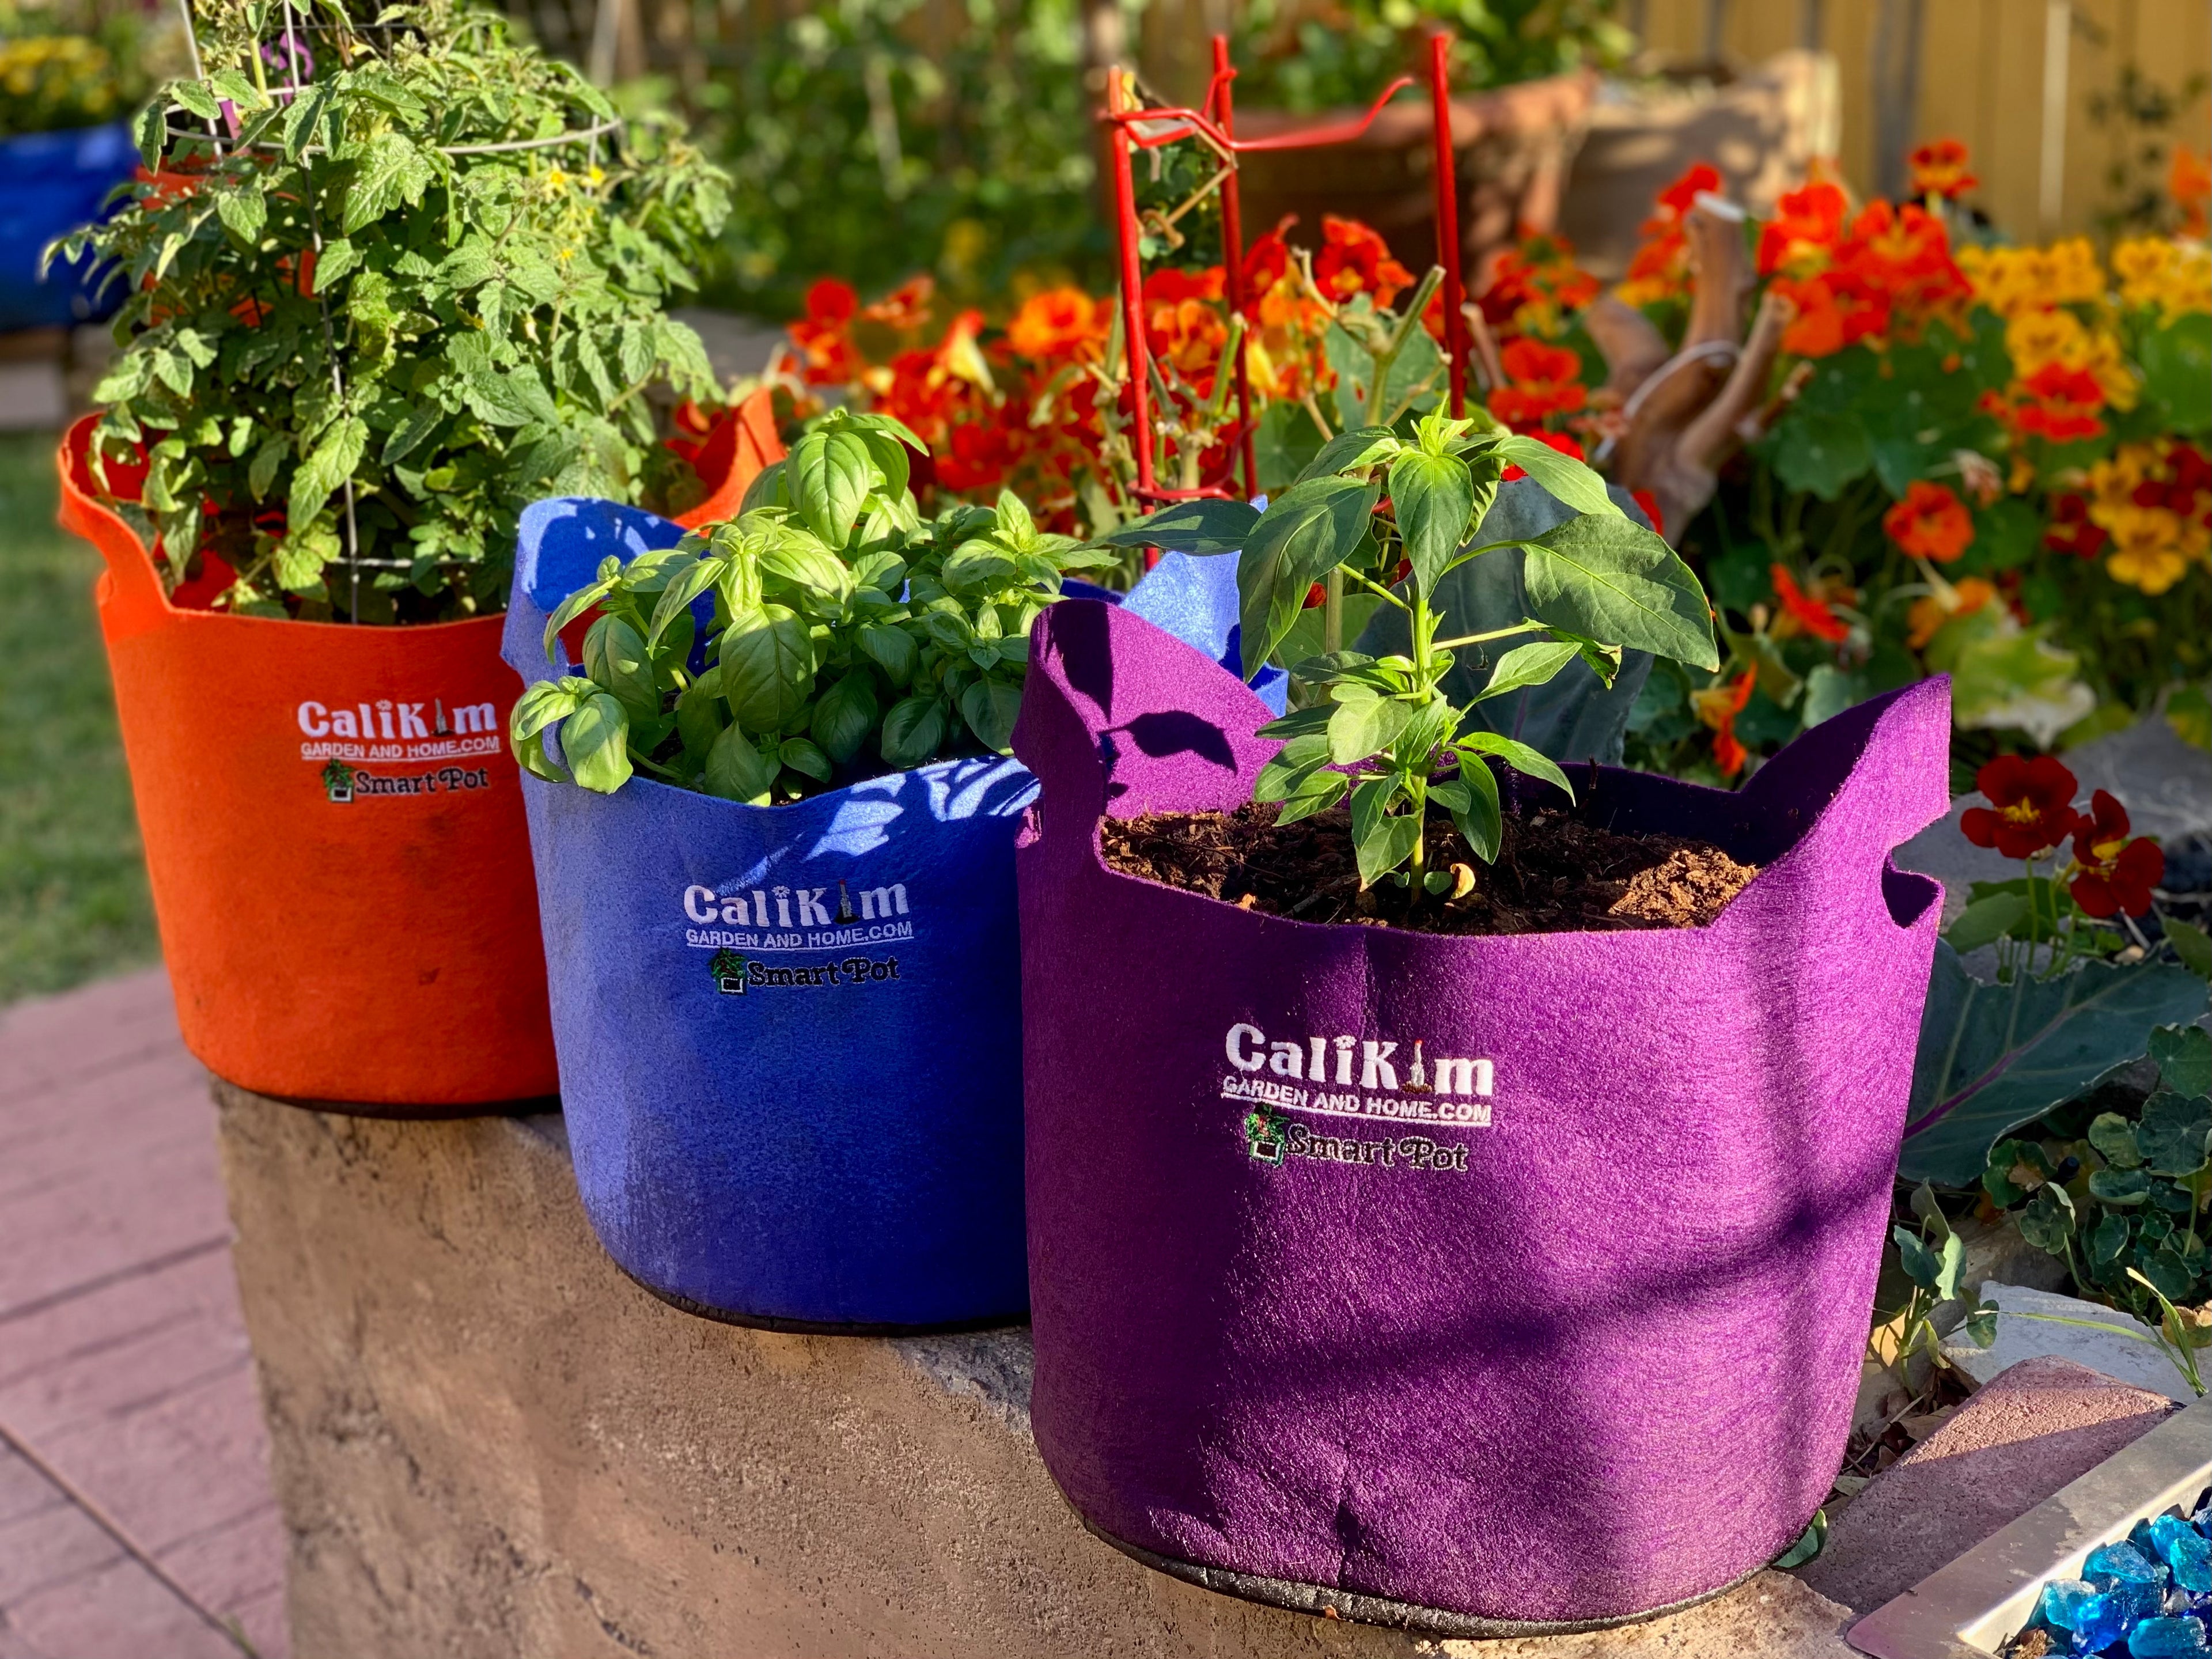 Garnen 20 Gallon Garden Grow Bag with Handles - 5 Pack - Black/Green